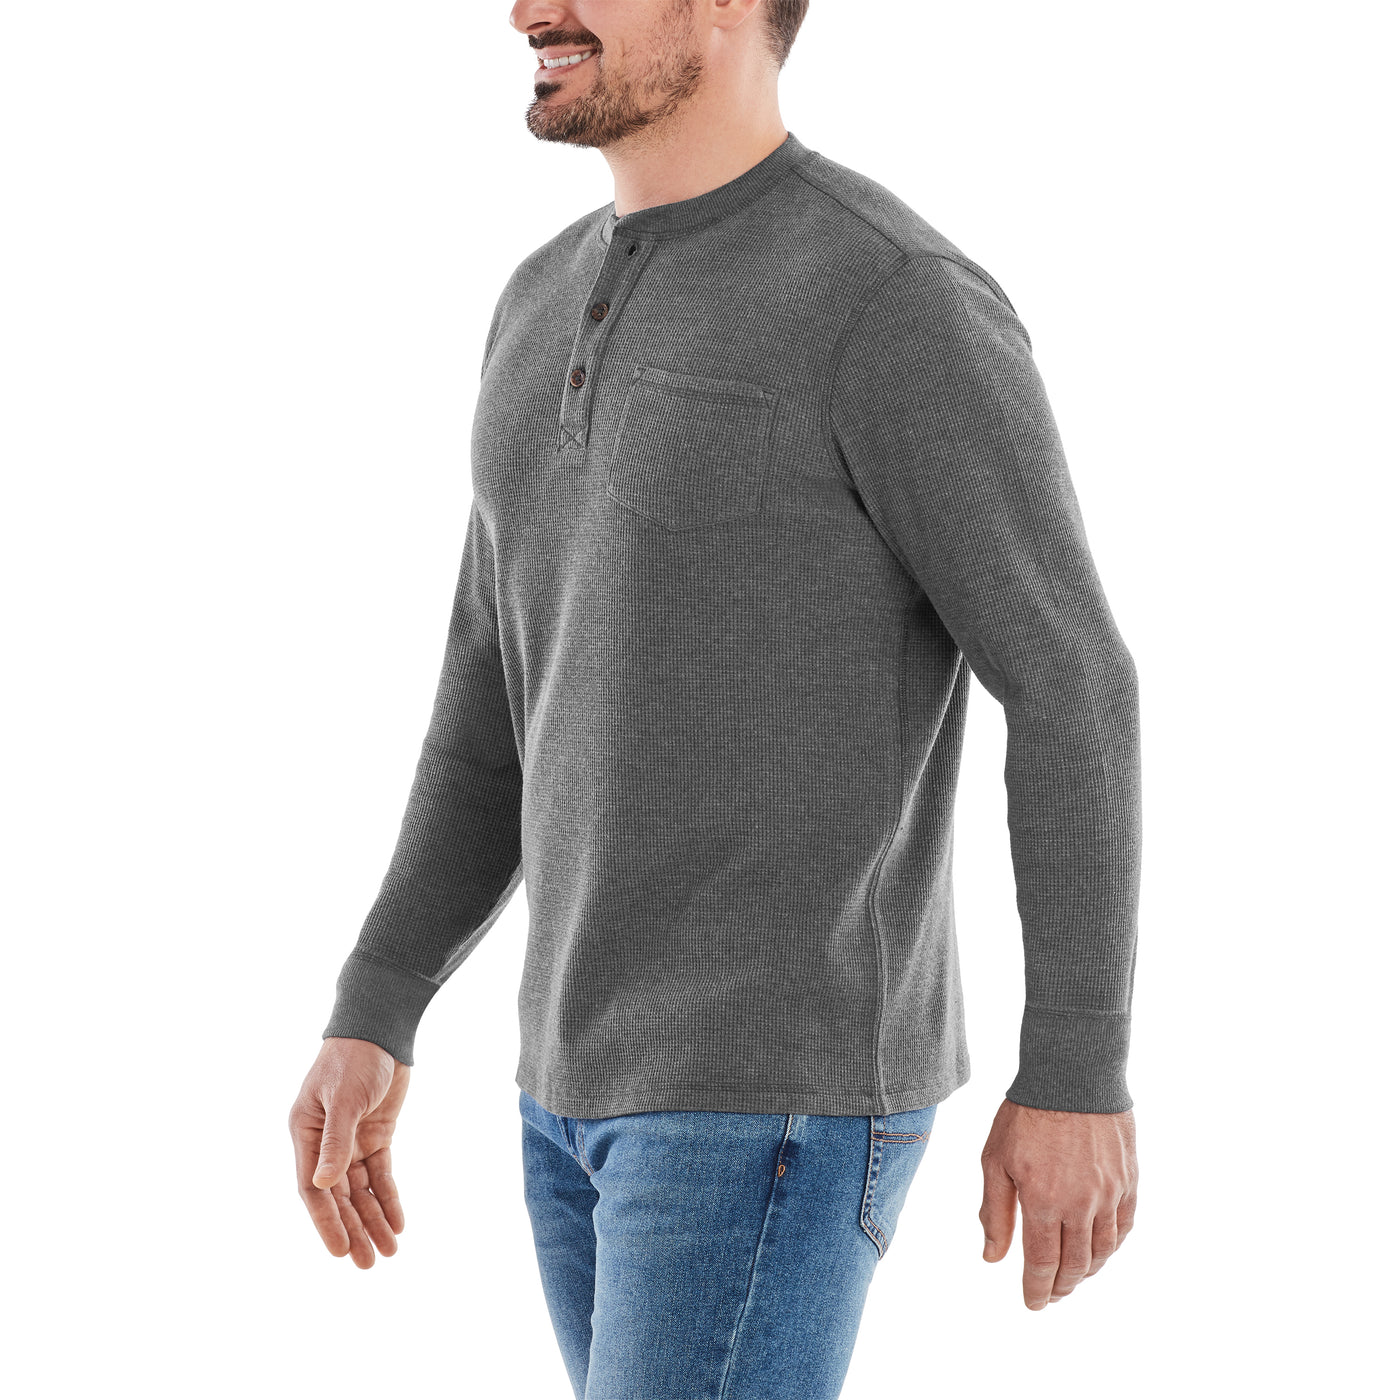 18 Wholesale Knocker Men's WafflE-Knit Thermal Henley Shirt Size L - at 